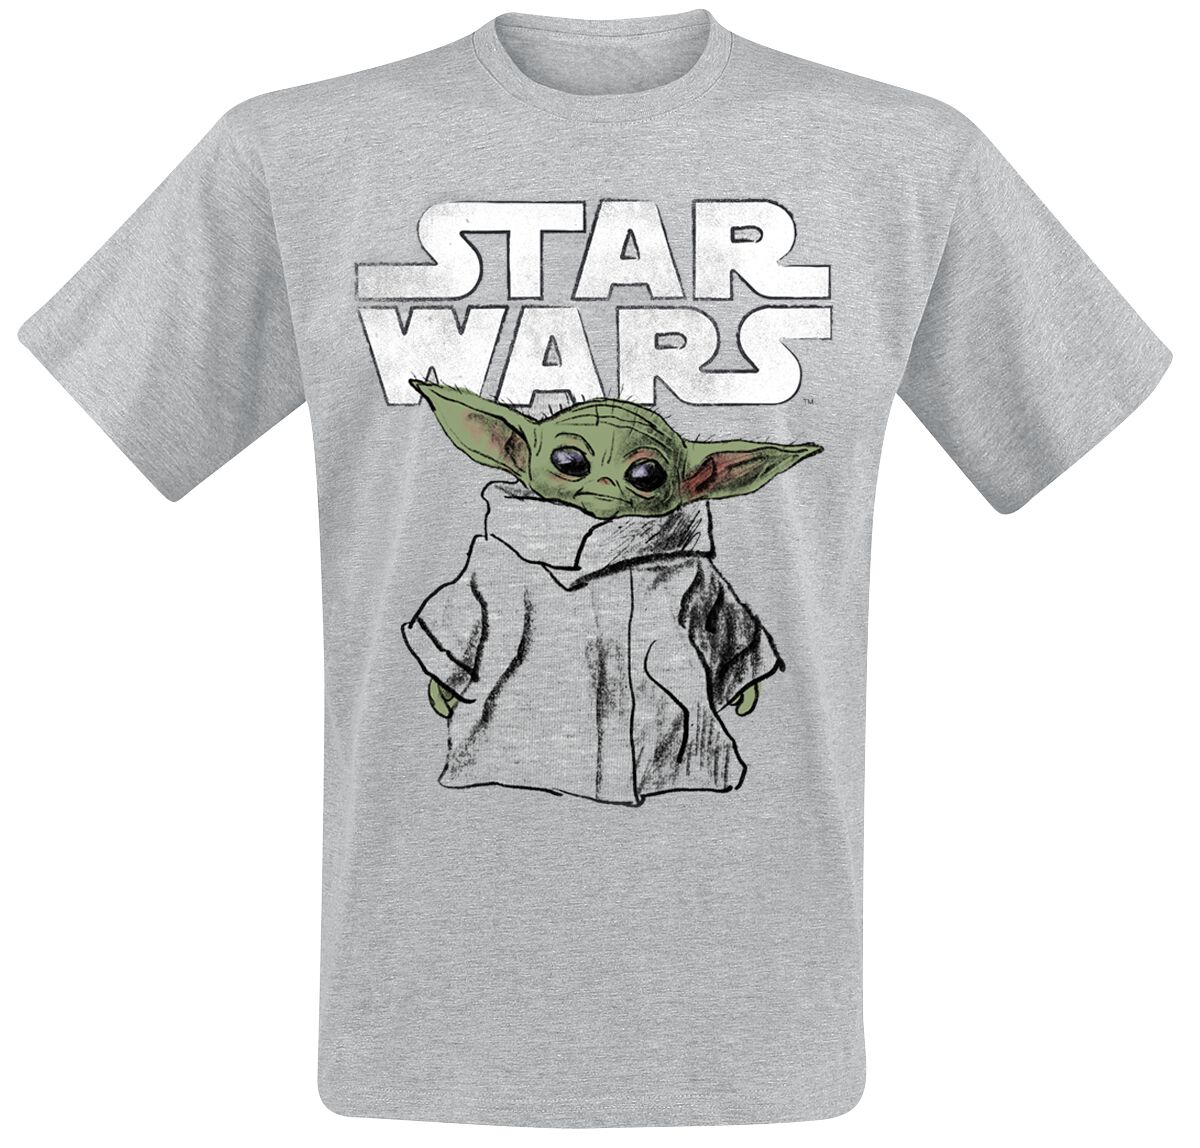 Star Wars T-Shirt - The Mandalorian - Grogu - Sketch - S bis 4XL - für Männer - Größe L - grau meliert  - Lizenzierter Fanartikel